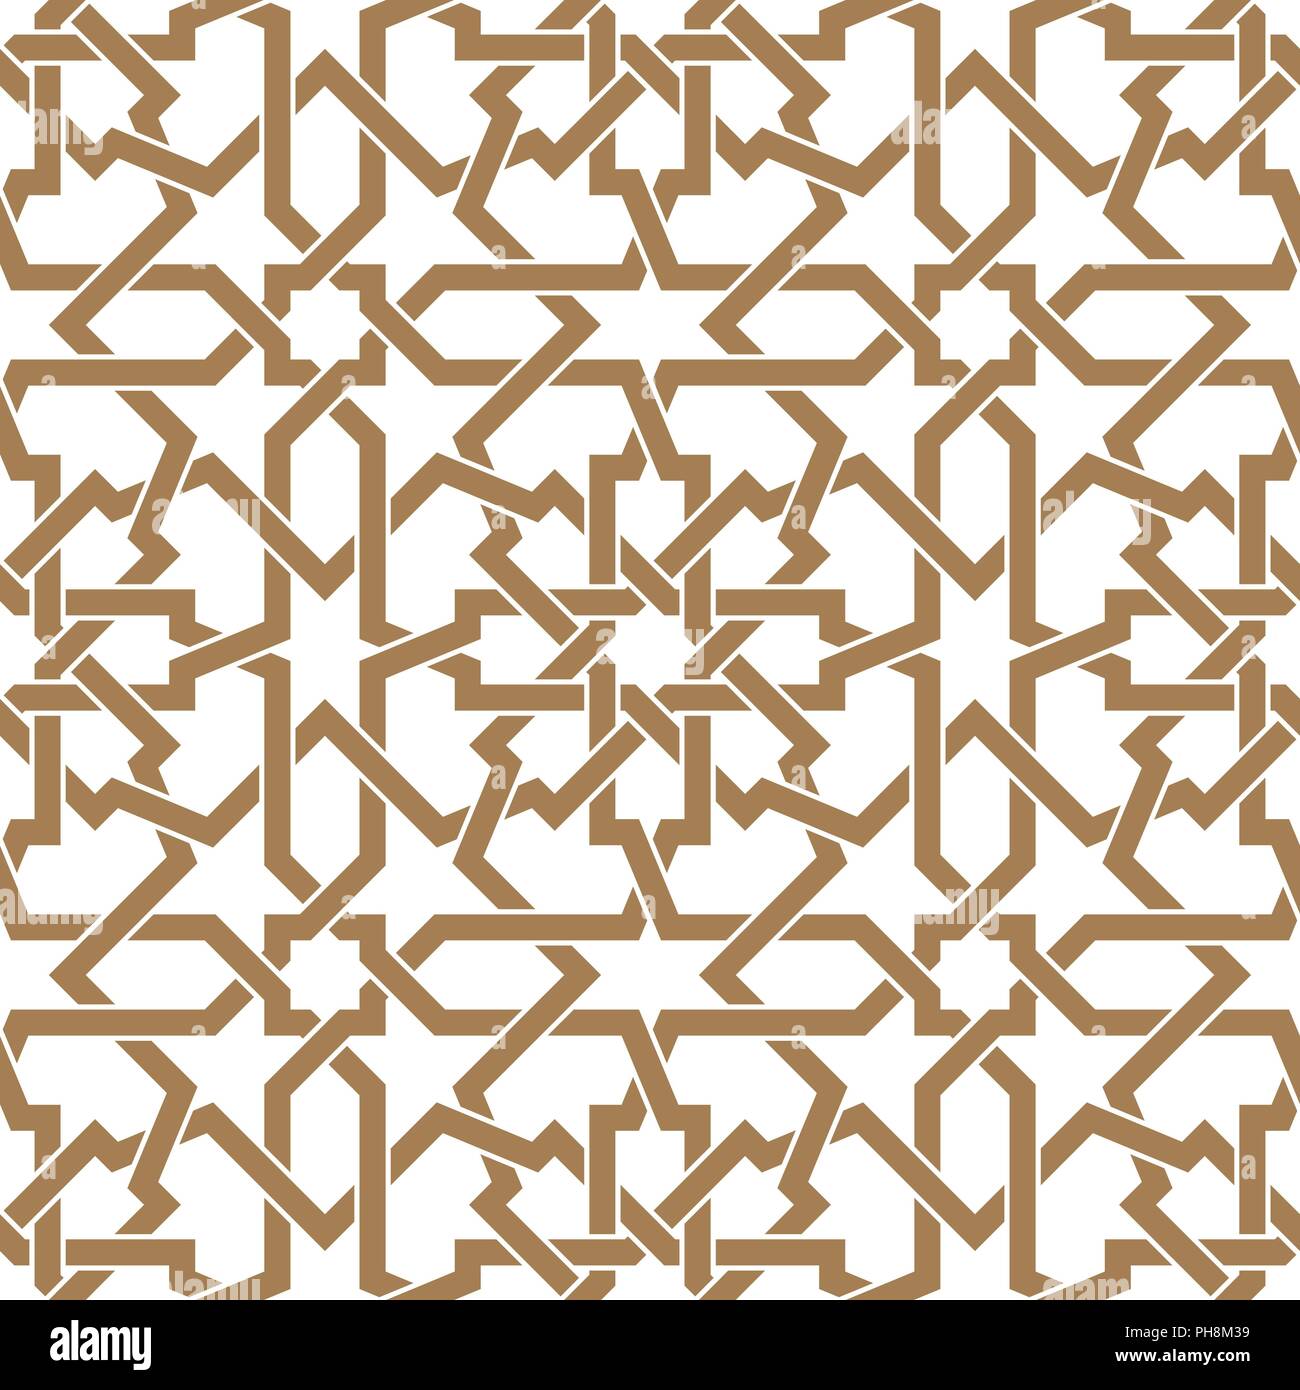 Seamless Arabic Geometric Ornament Based On Traditional Arabic Art